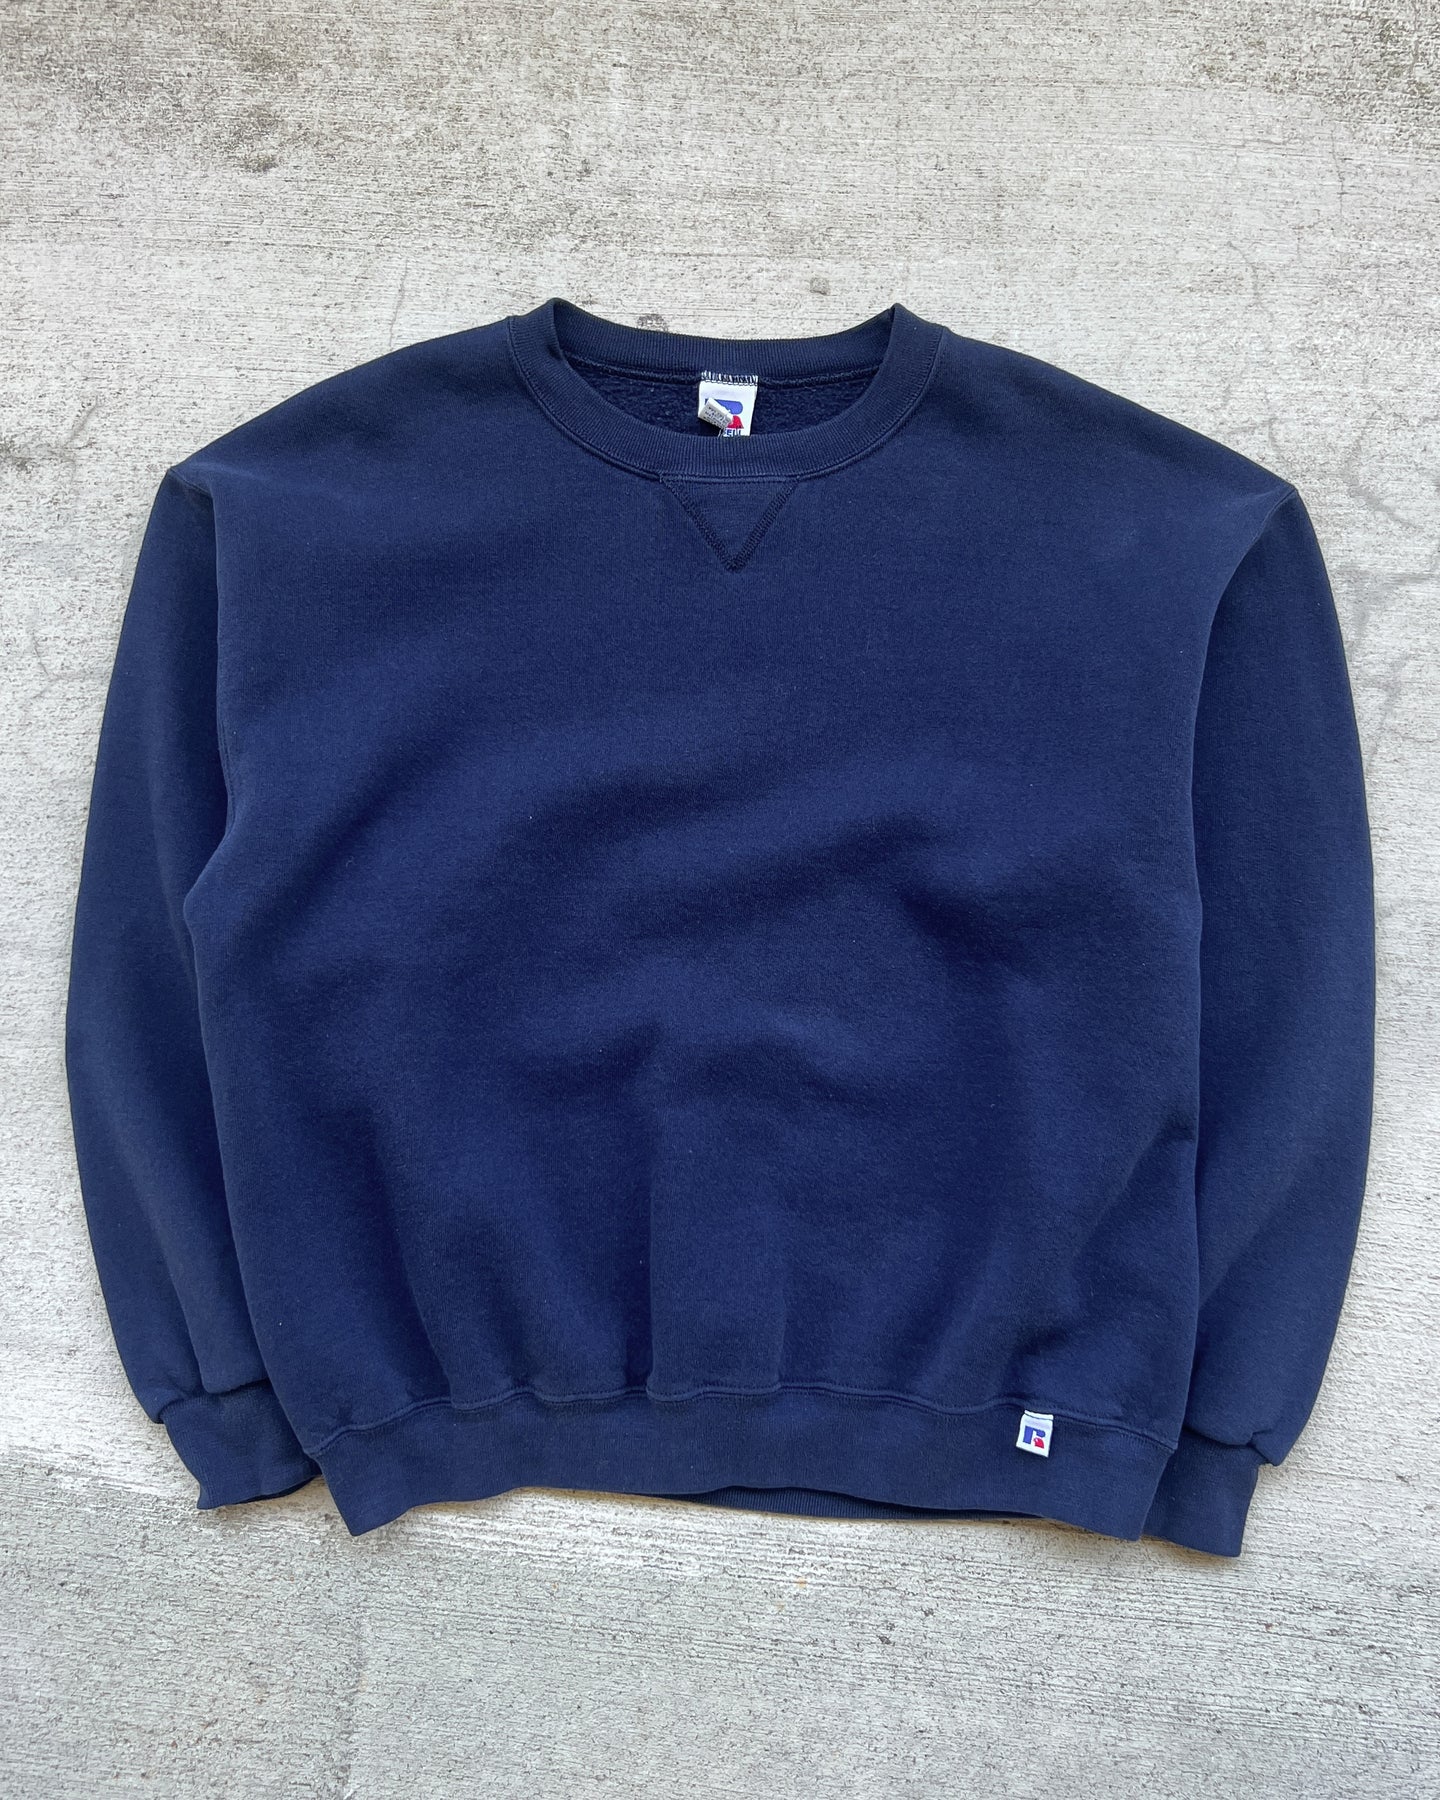 1990s Russell Athletic Navy Crewneck Sweatshirt - Large